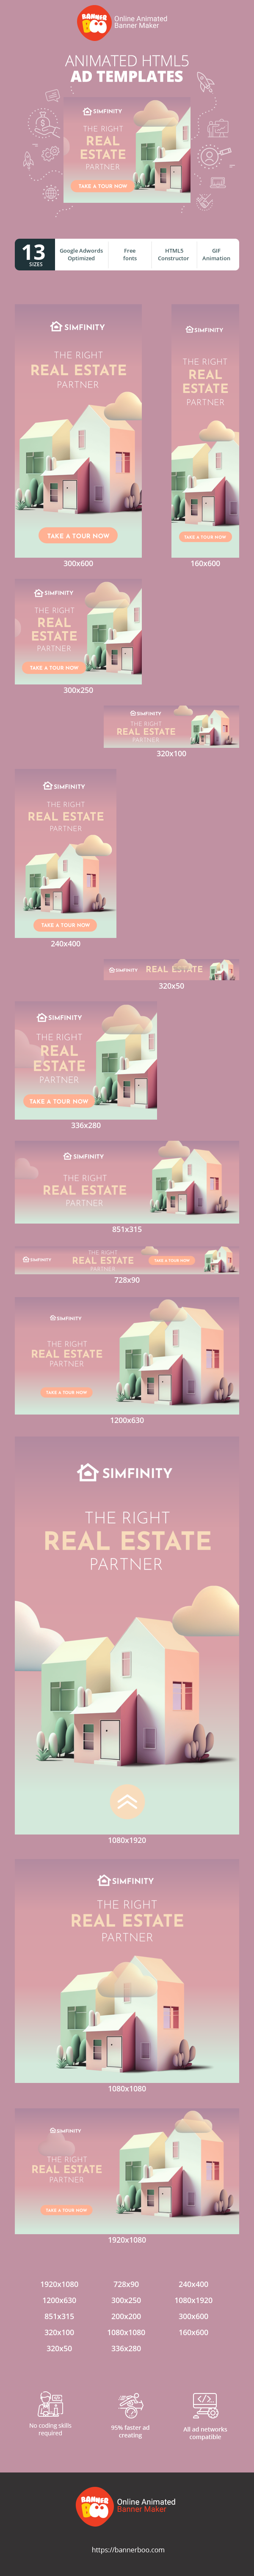 Szablon reklamy banerowej — The Right Real Estate Partner — Real Estate